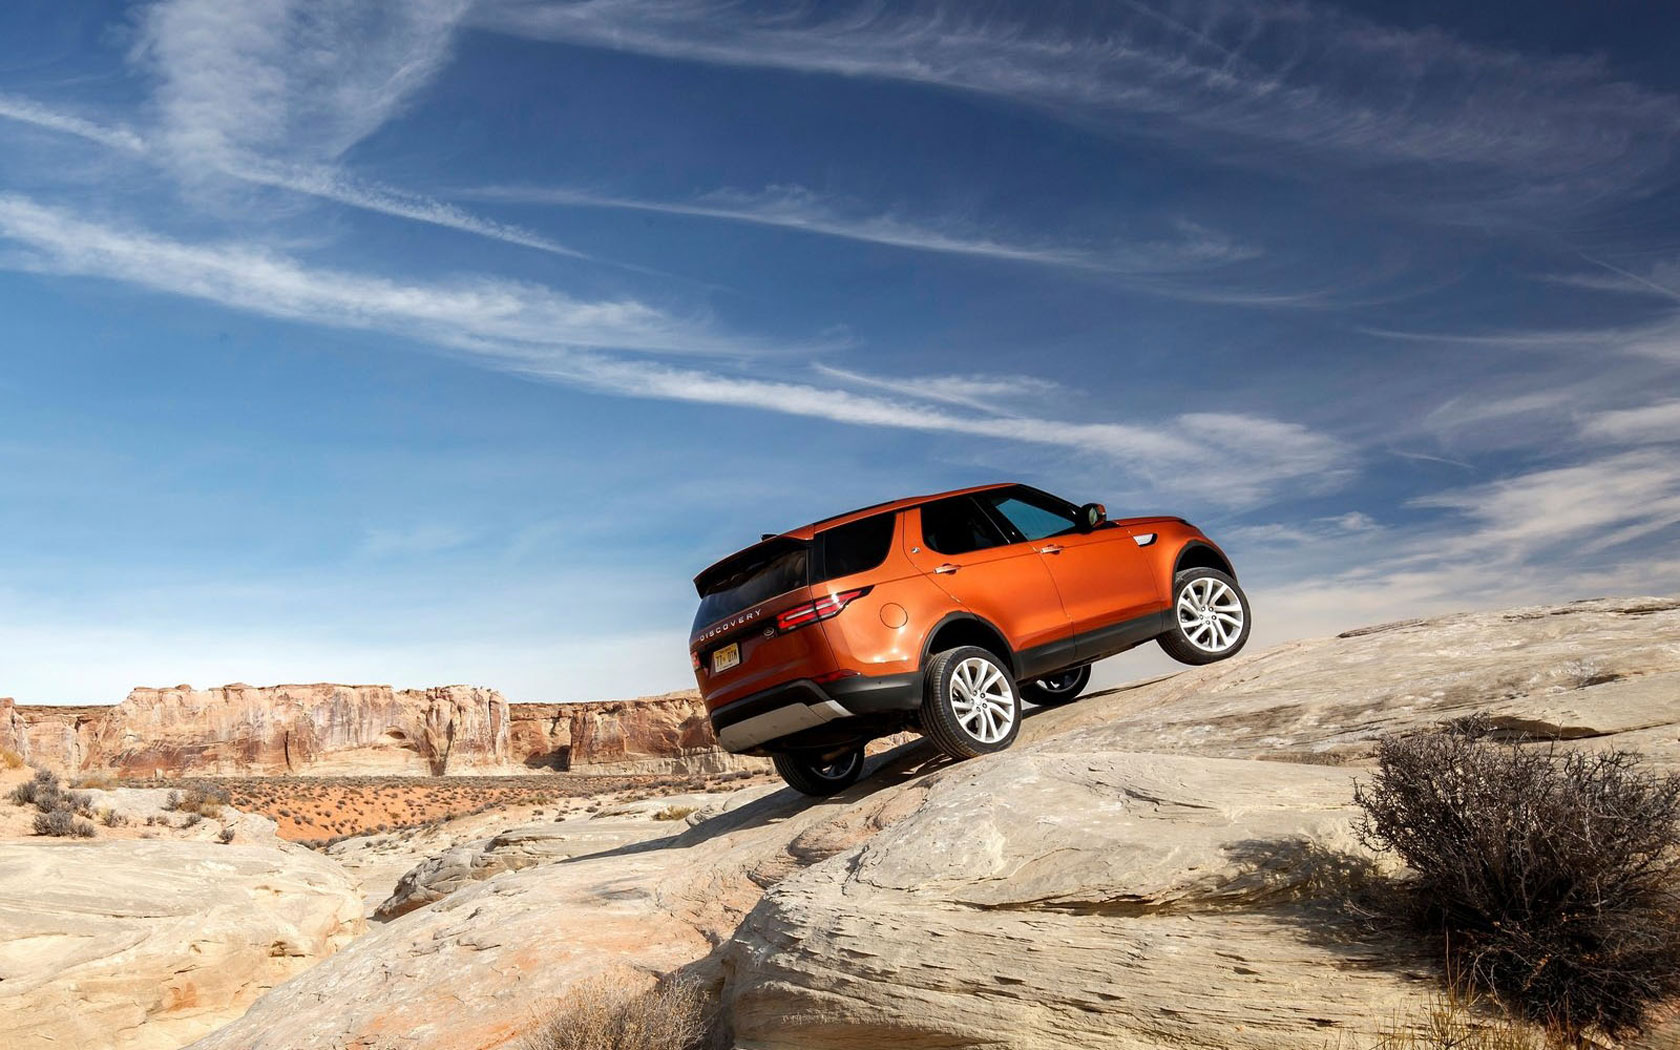 Дискавери 16. Land Rover Discovery 5. Land Rover Discovery 2016. Land Rover Discovery 70 цвета Namib Orange.. Дискавери на дороге.